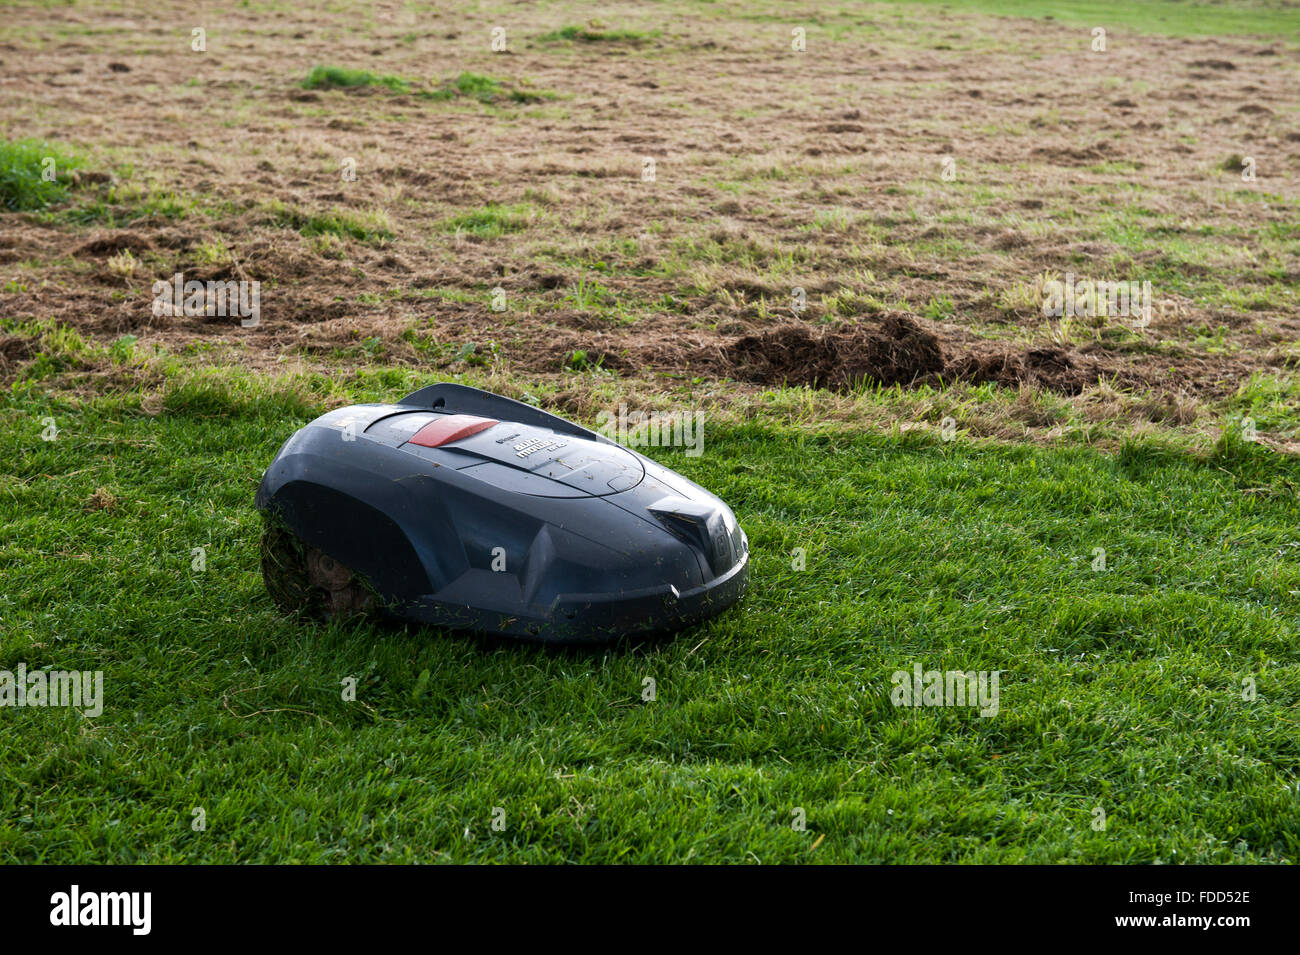 Robot mower on grass England UK Europe Stock Photo